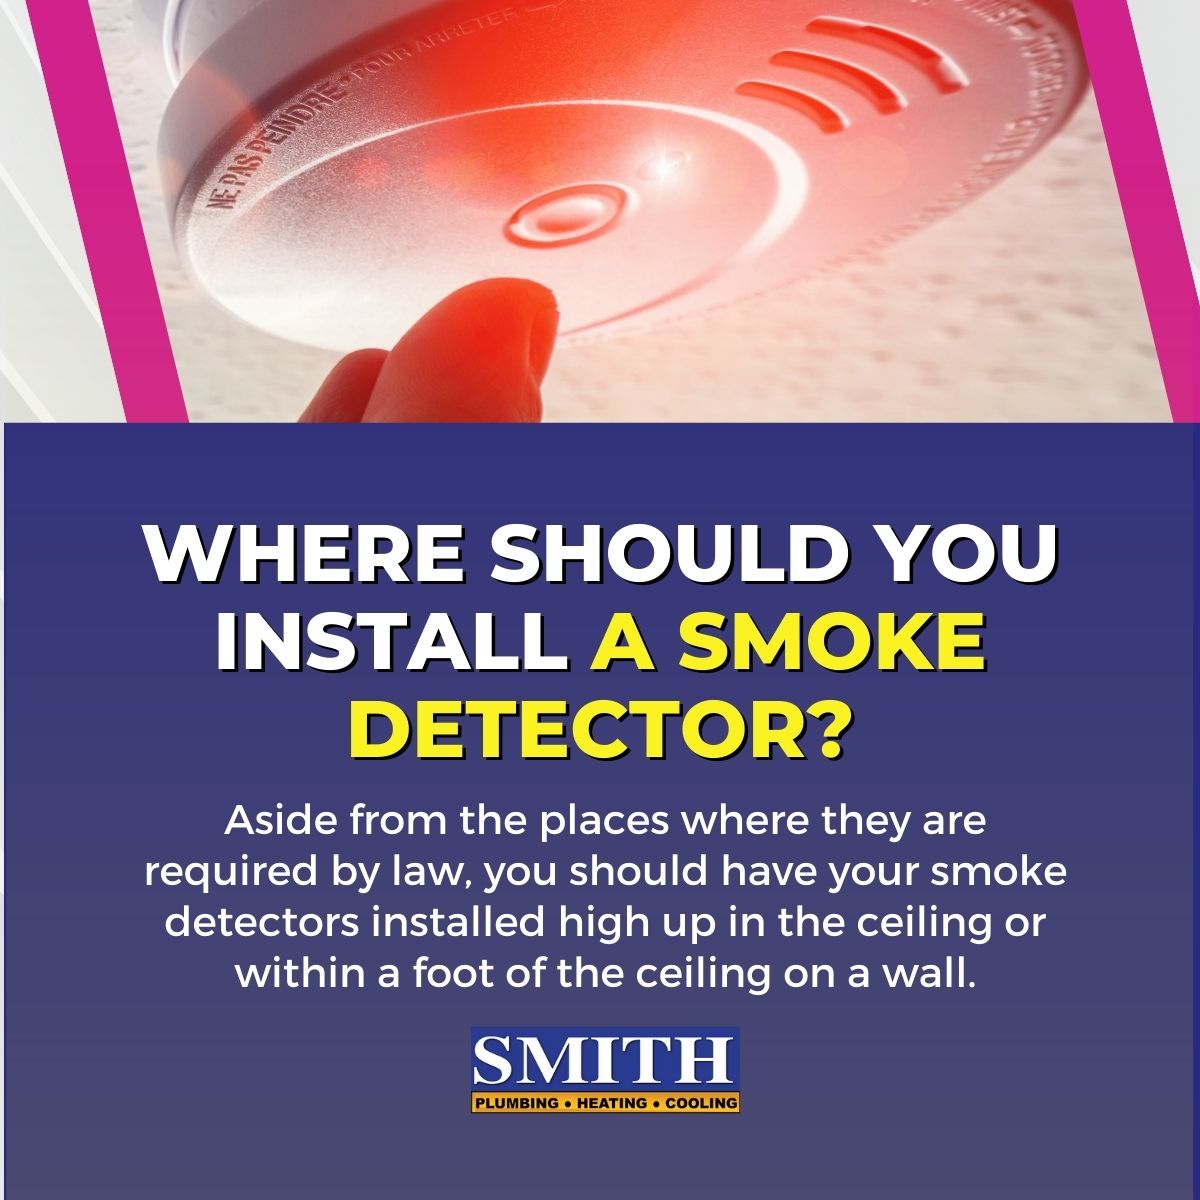 Where should you install a smoke detector?